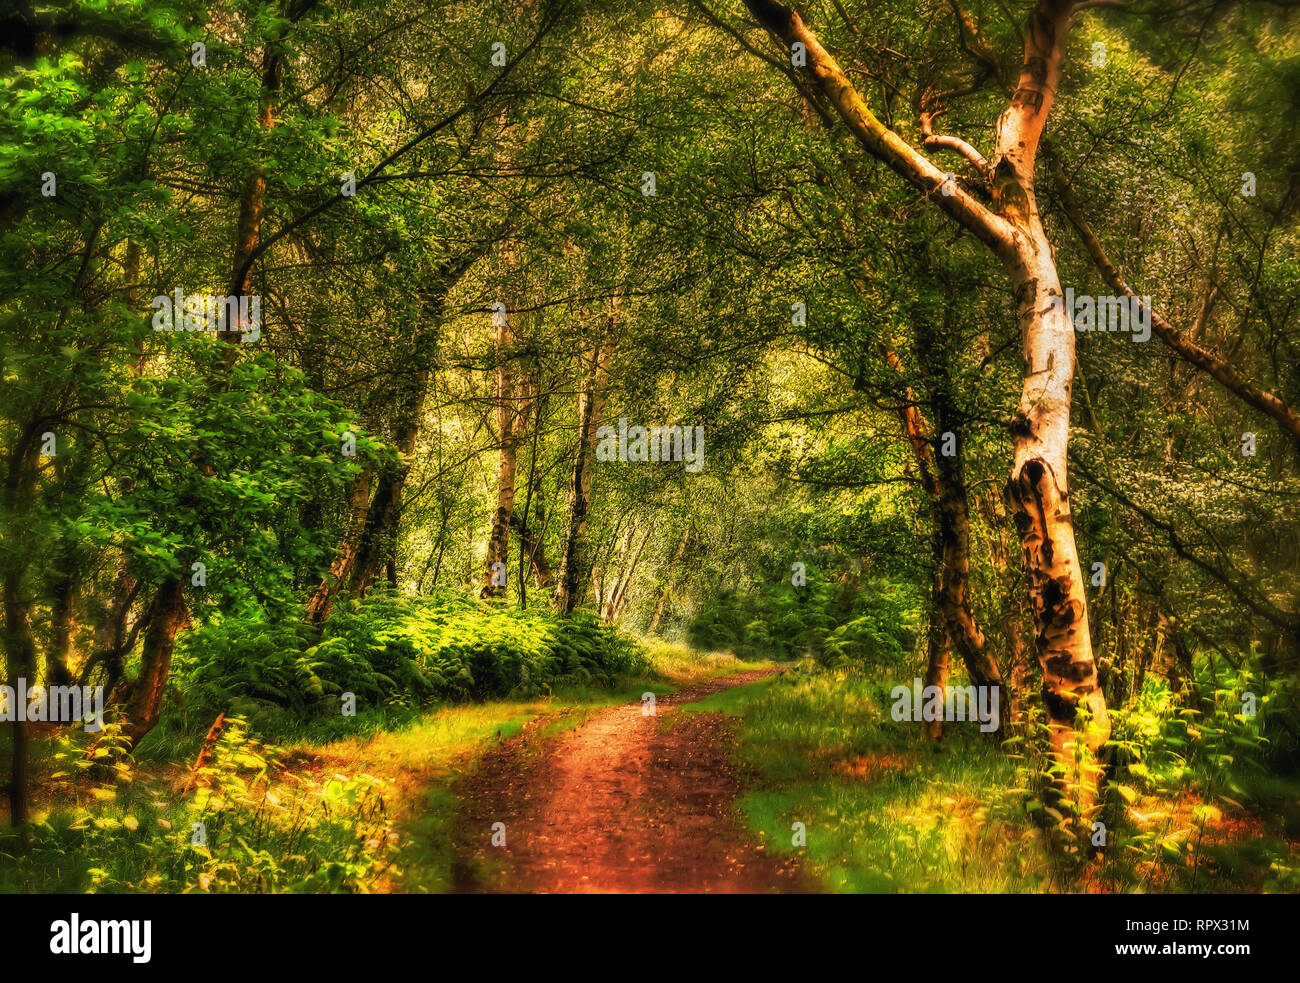 Footpath through the forest, Australia Stock Photo